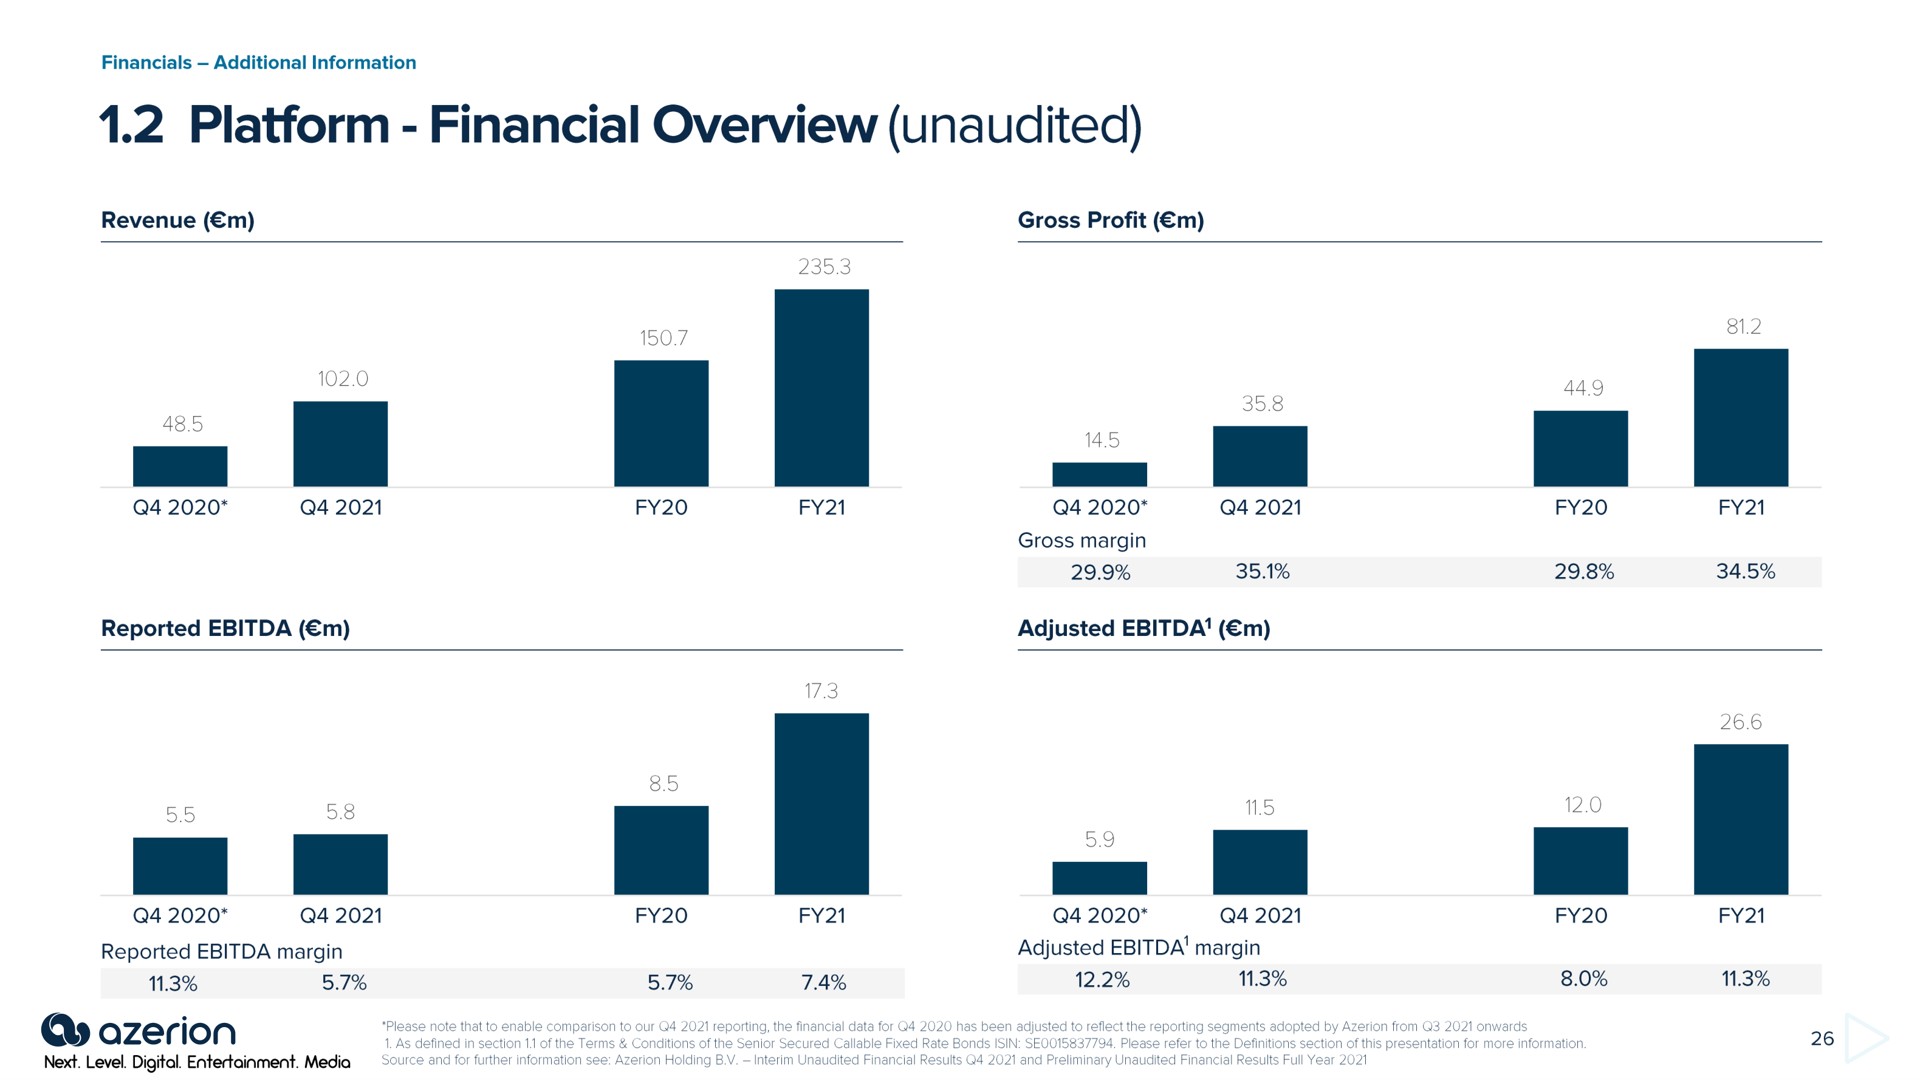 platform financial overview unaudited | Azerion